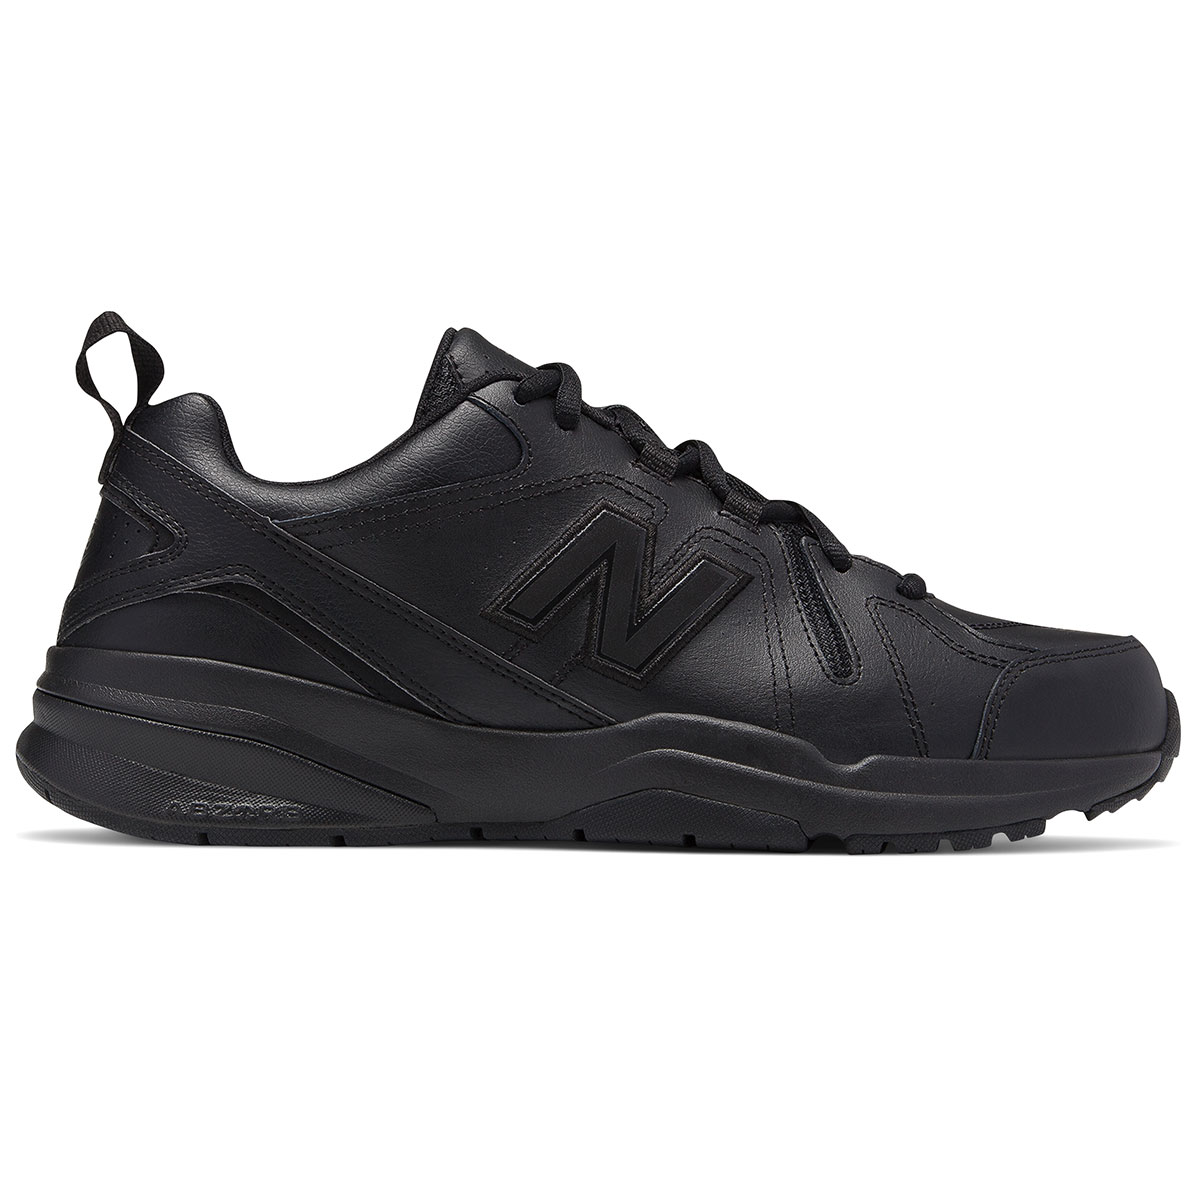 New Balance Men's 608V5 Training Shoes, Extra Wide - Black, 9.5